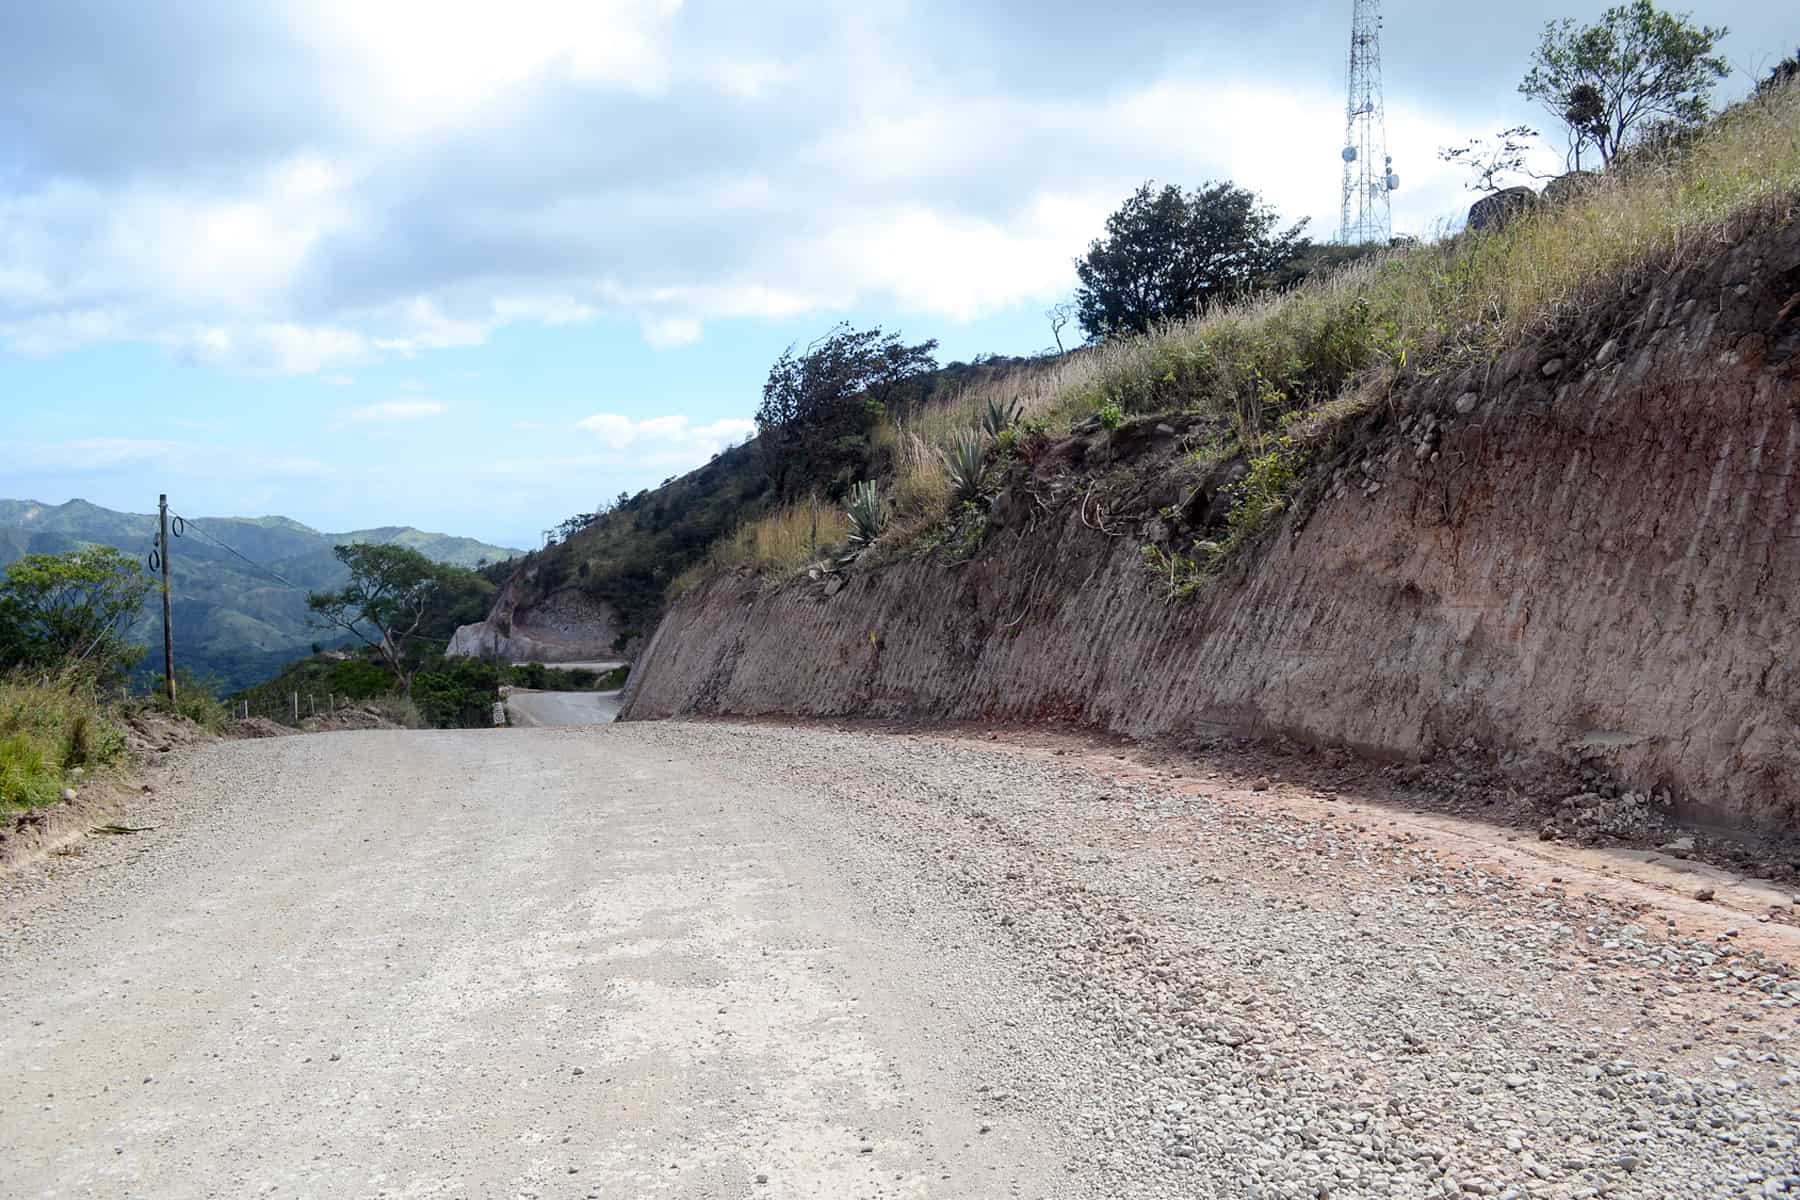 The gravel road to Monteverde - Route 606.